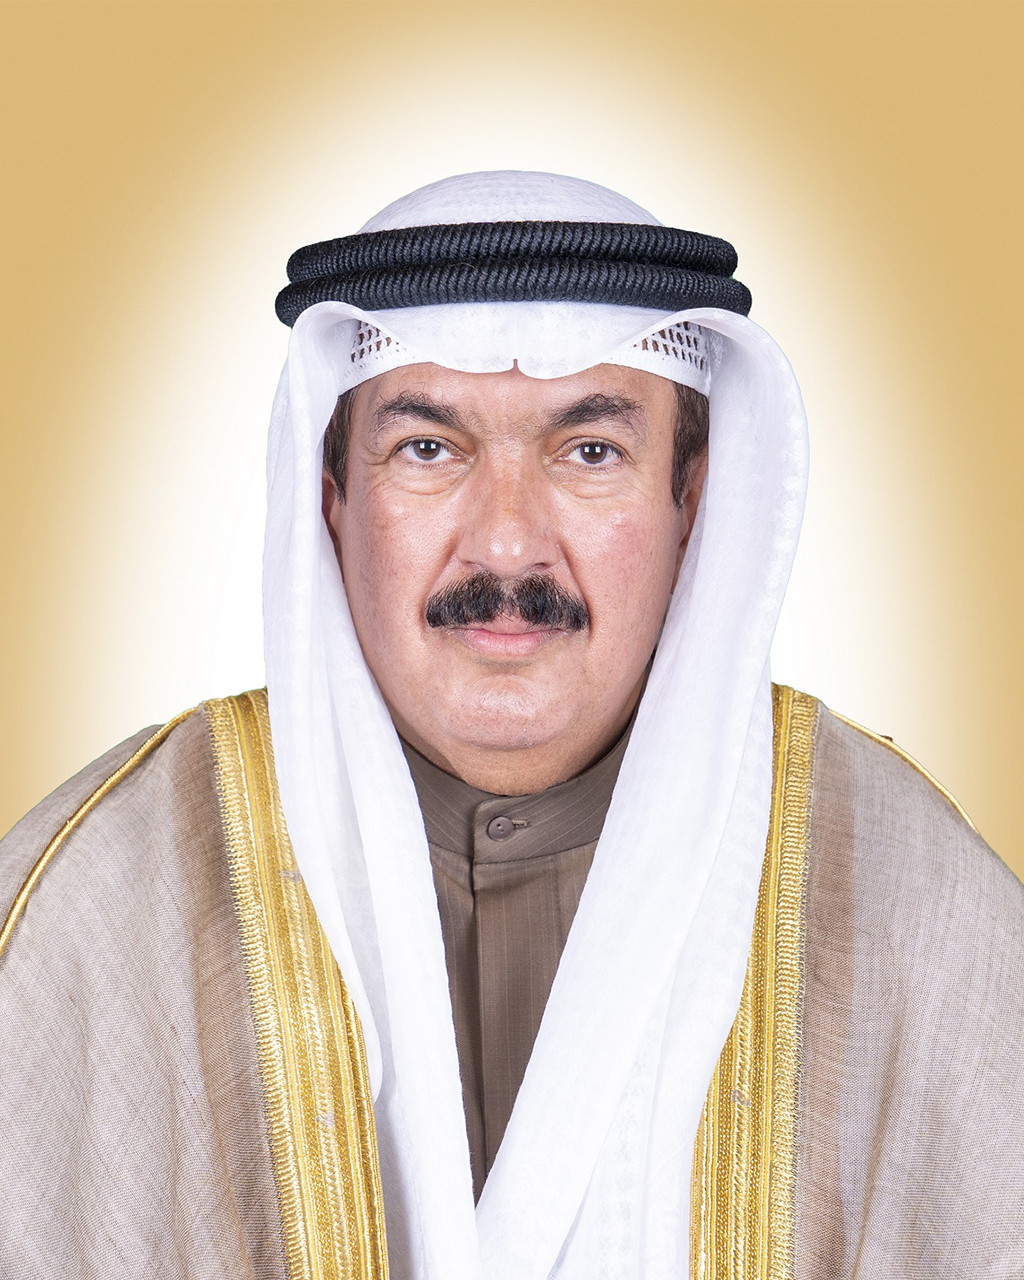 Dr. Ali Al-Mudhaf, Minister of Education and Minister of Higher Education and Scientific Research.